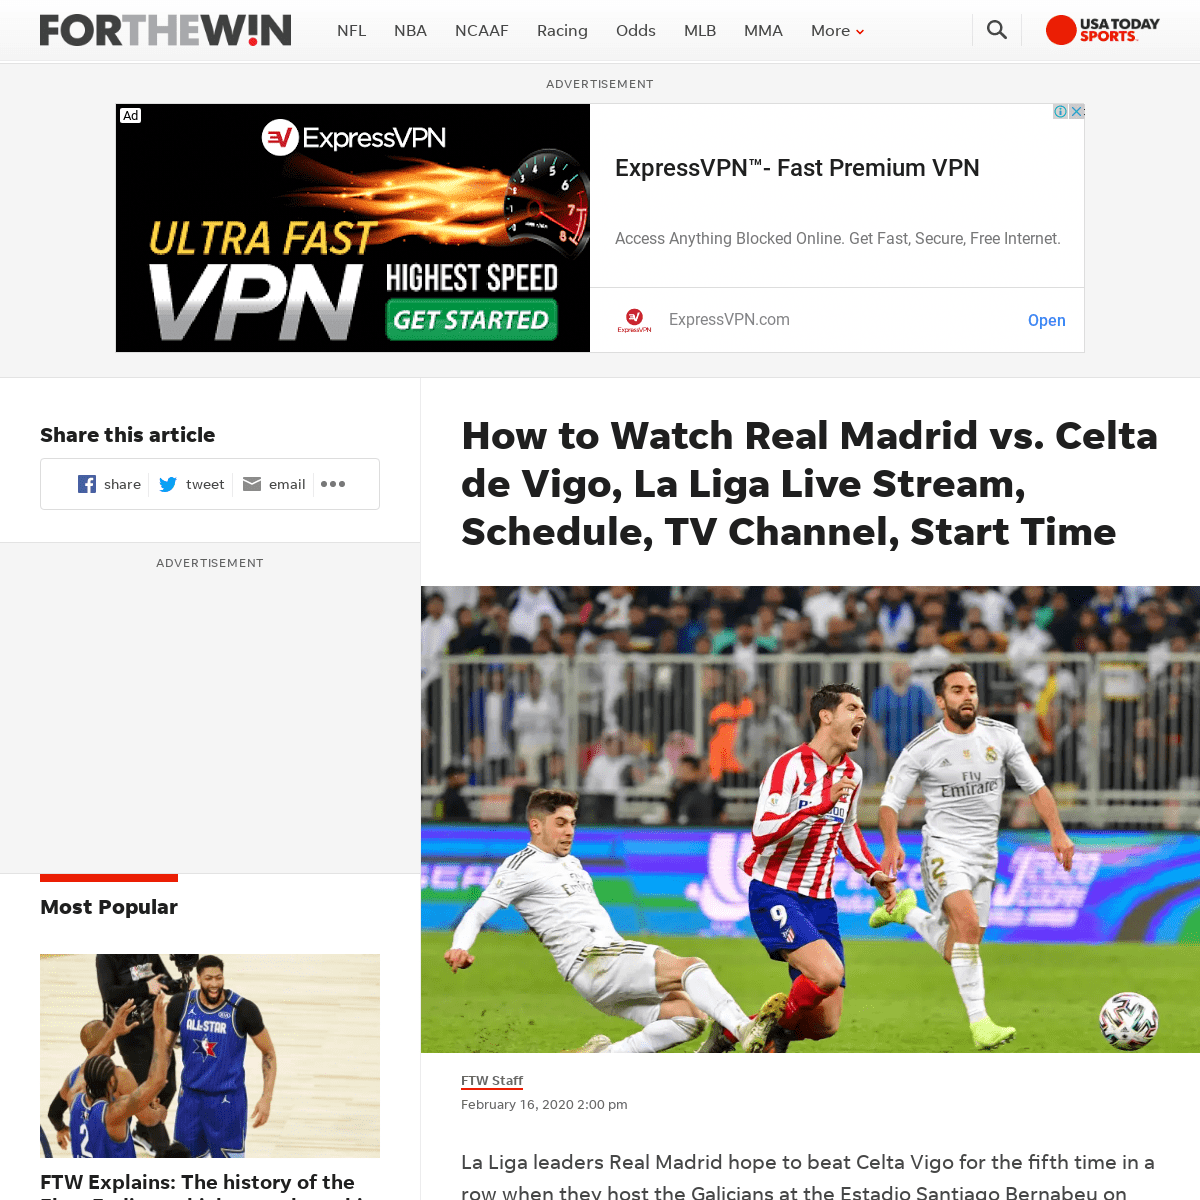 A complete backup of ftw.usatoday.com/2020/02/how-to-watch-real-madrid-vs-celta-de-vigo-la-liga-live-stream-schedule-tv-channel-